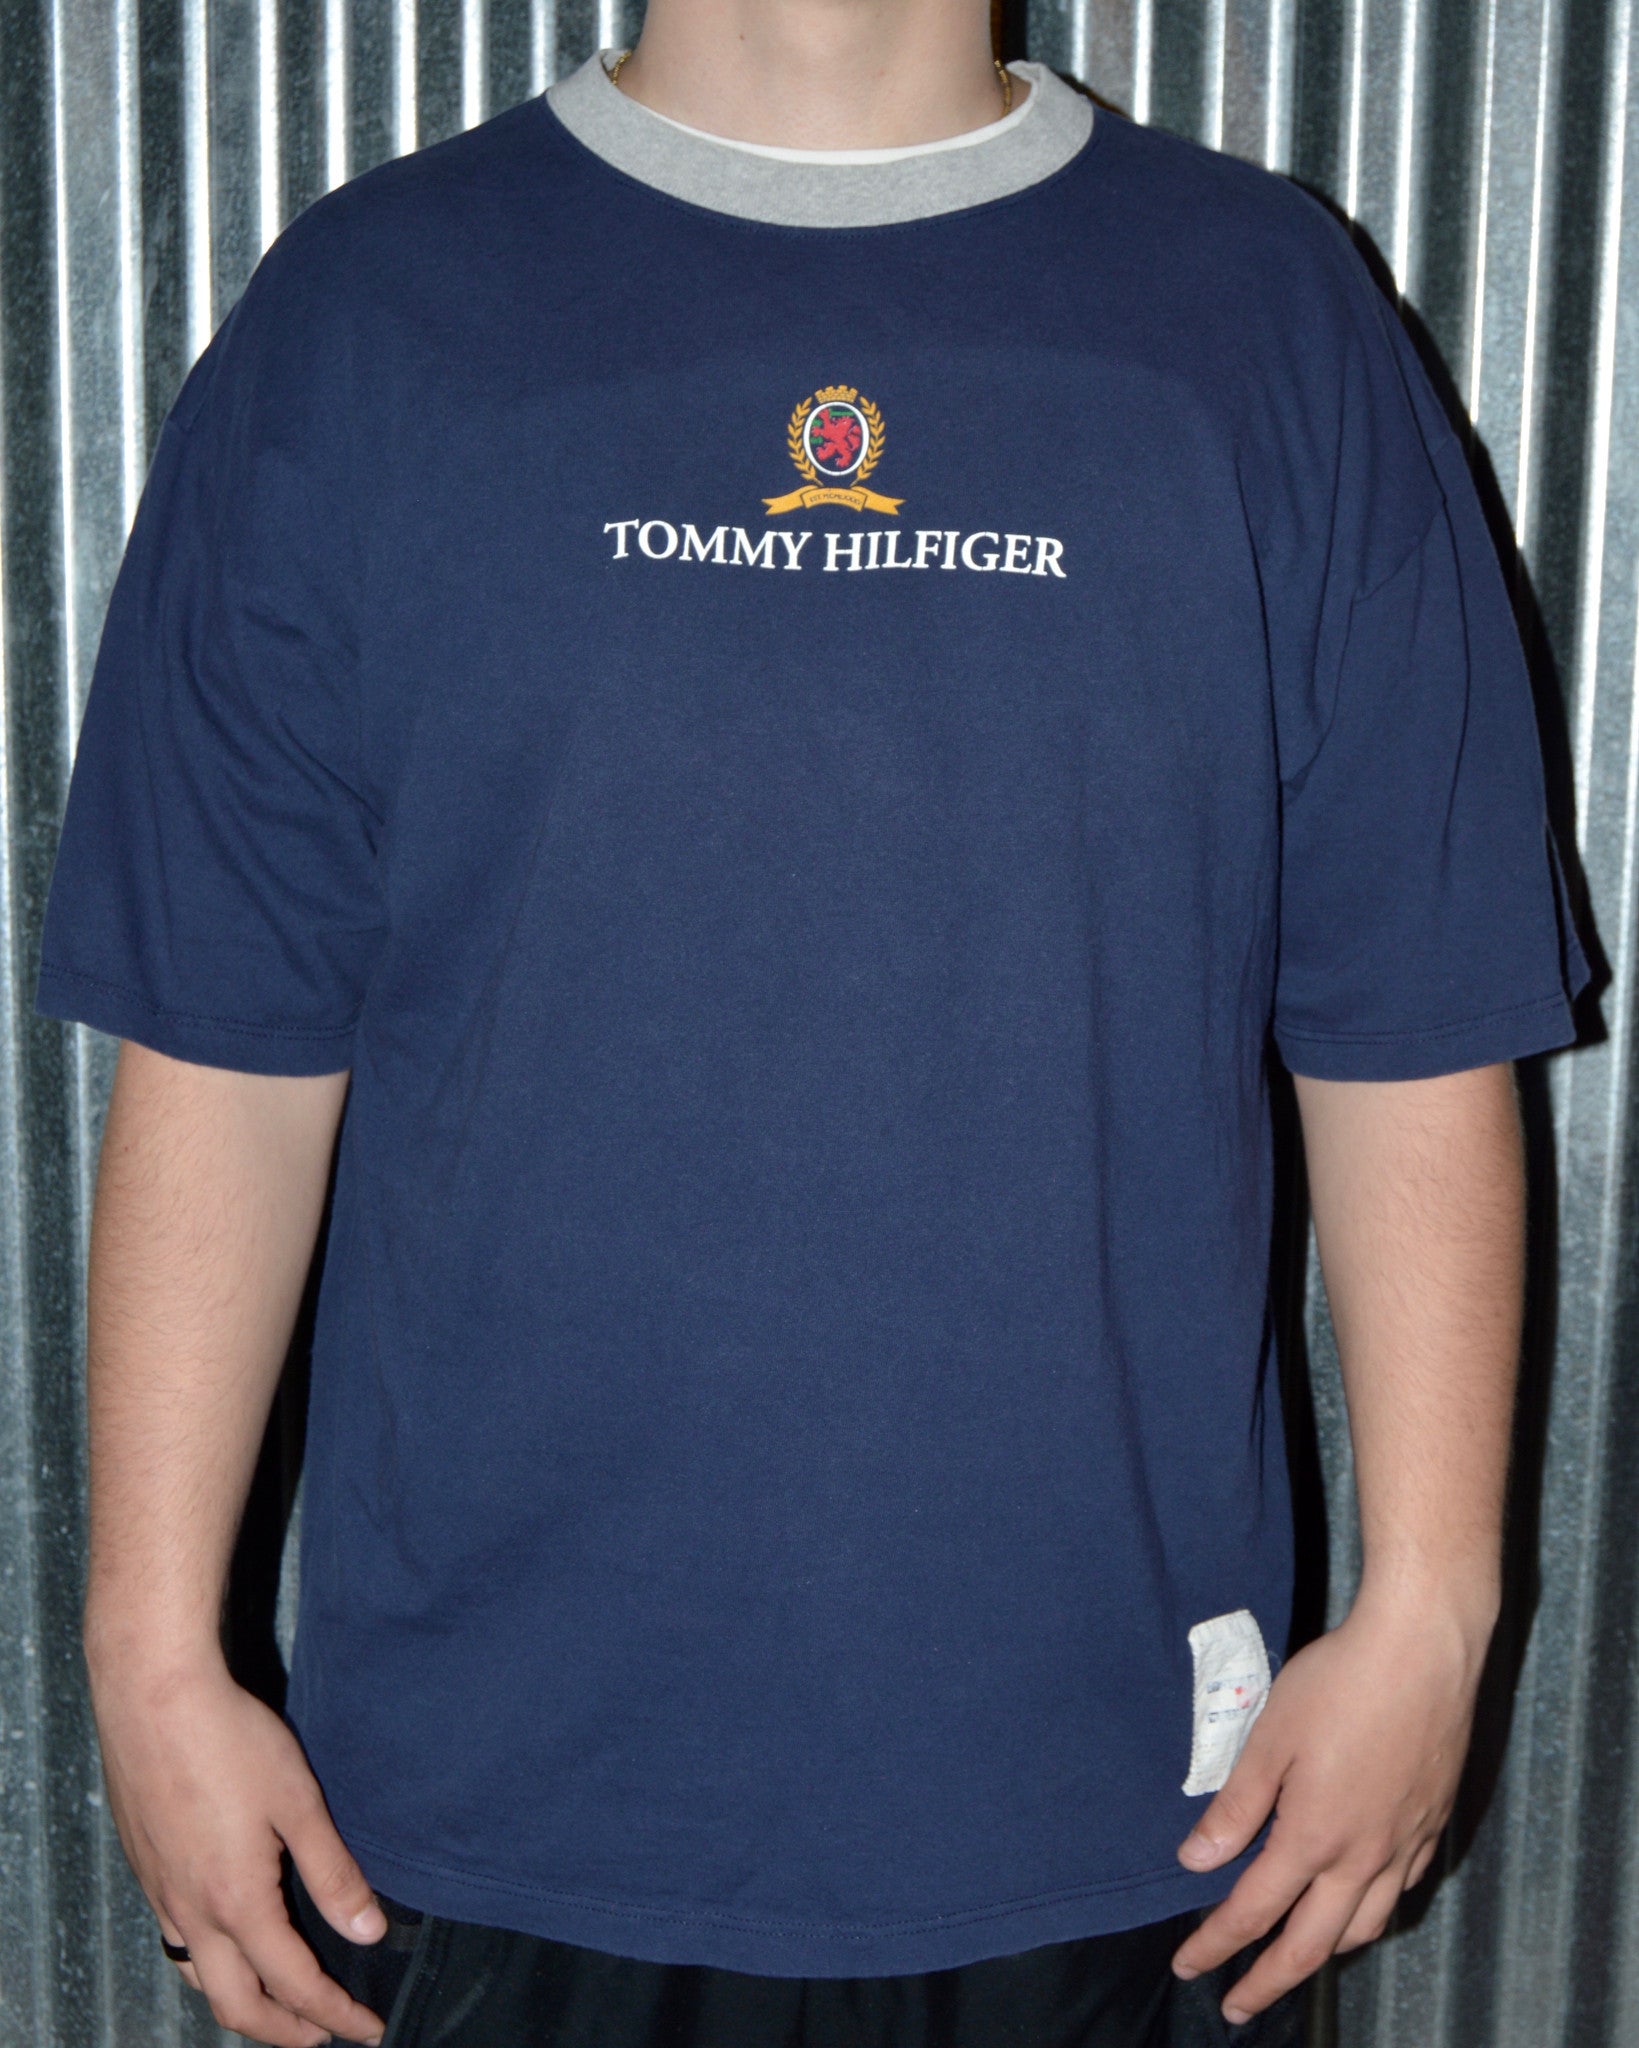 tommy hilfiger t shirt xl